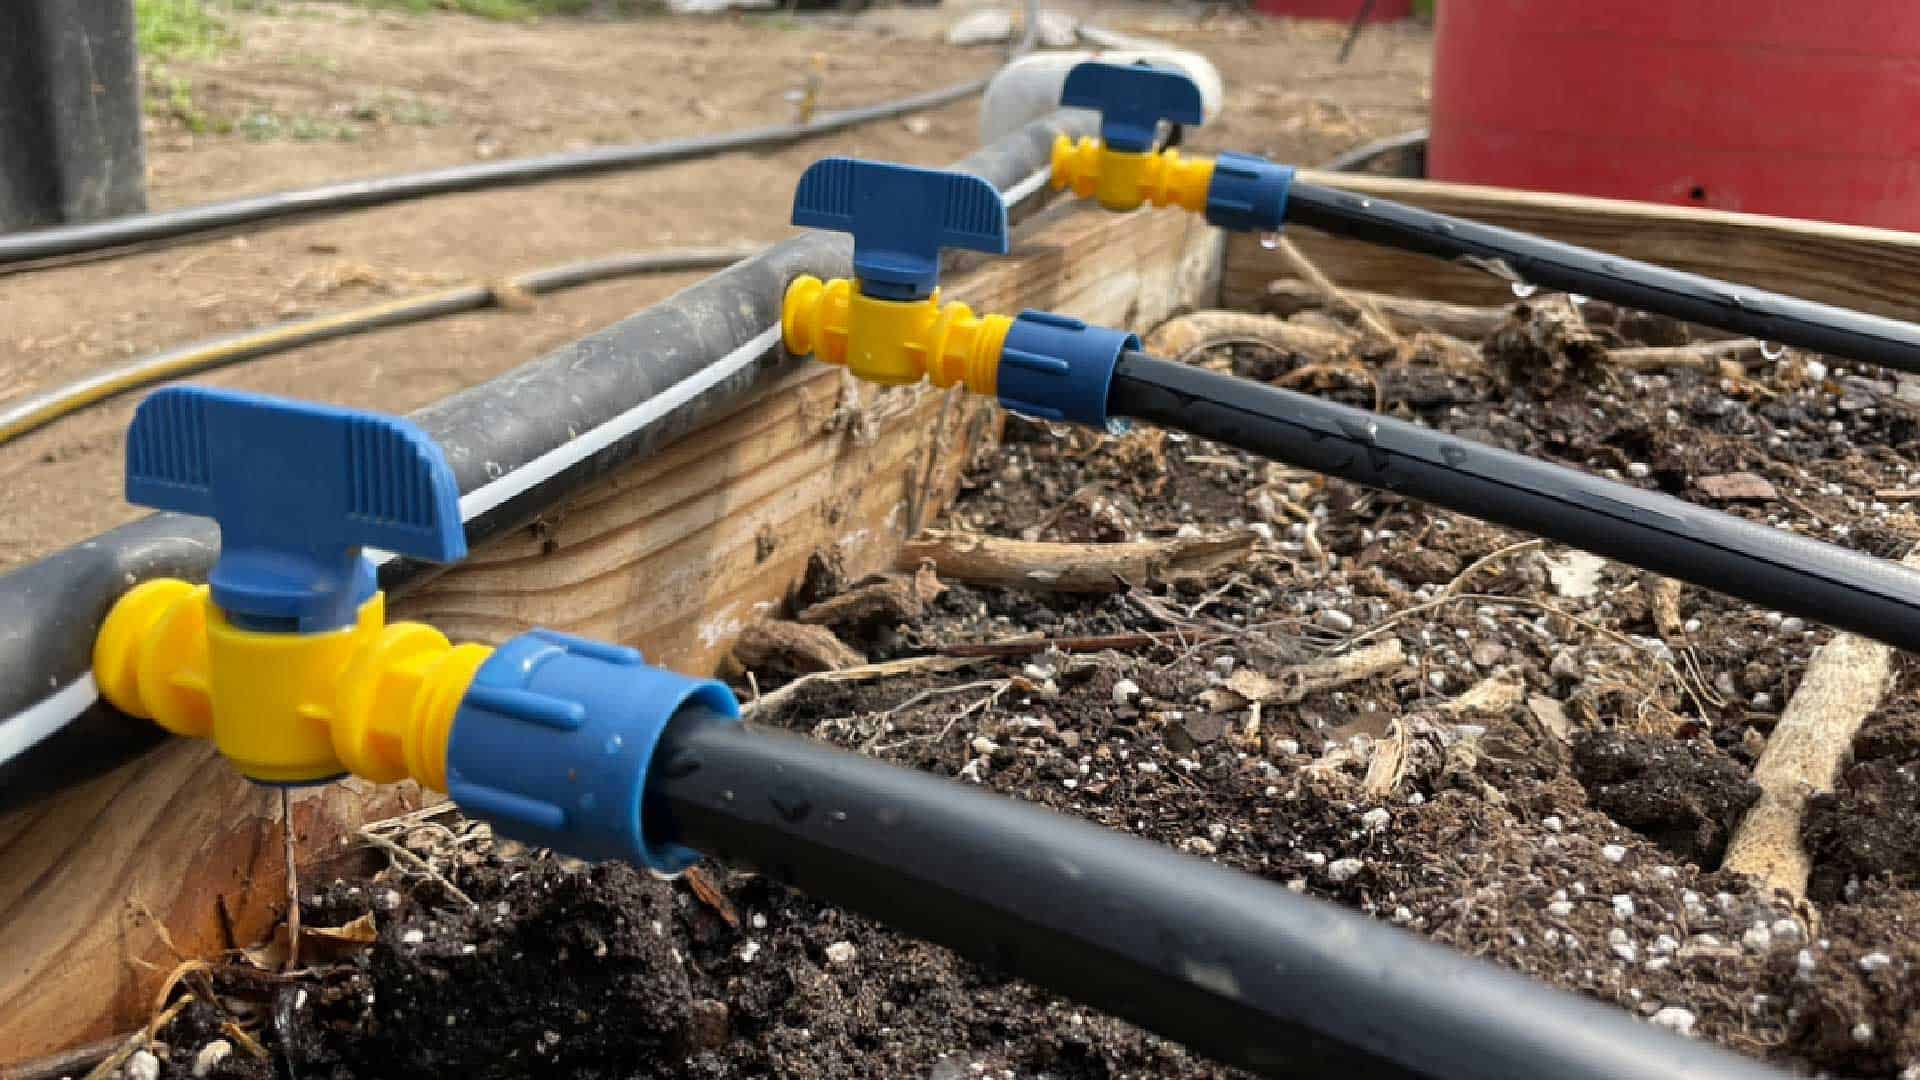 How To Install A Garden Drip Irrigation System Exmark S Backyard Life ...